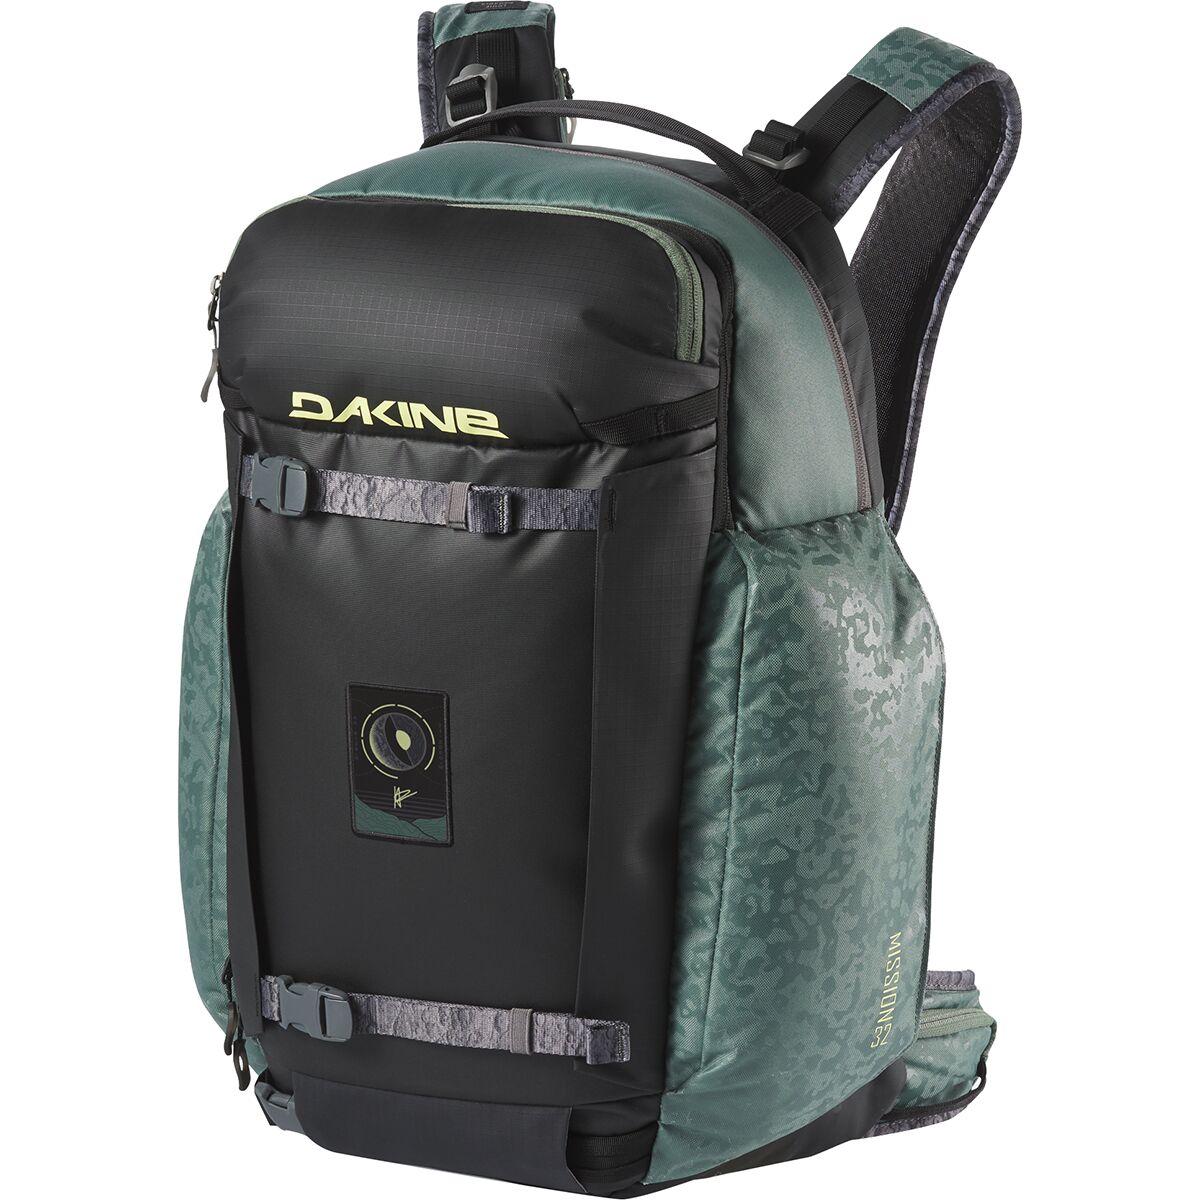 DAKINE Team Mission Pro 32L Backpack - Louif Paradis